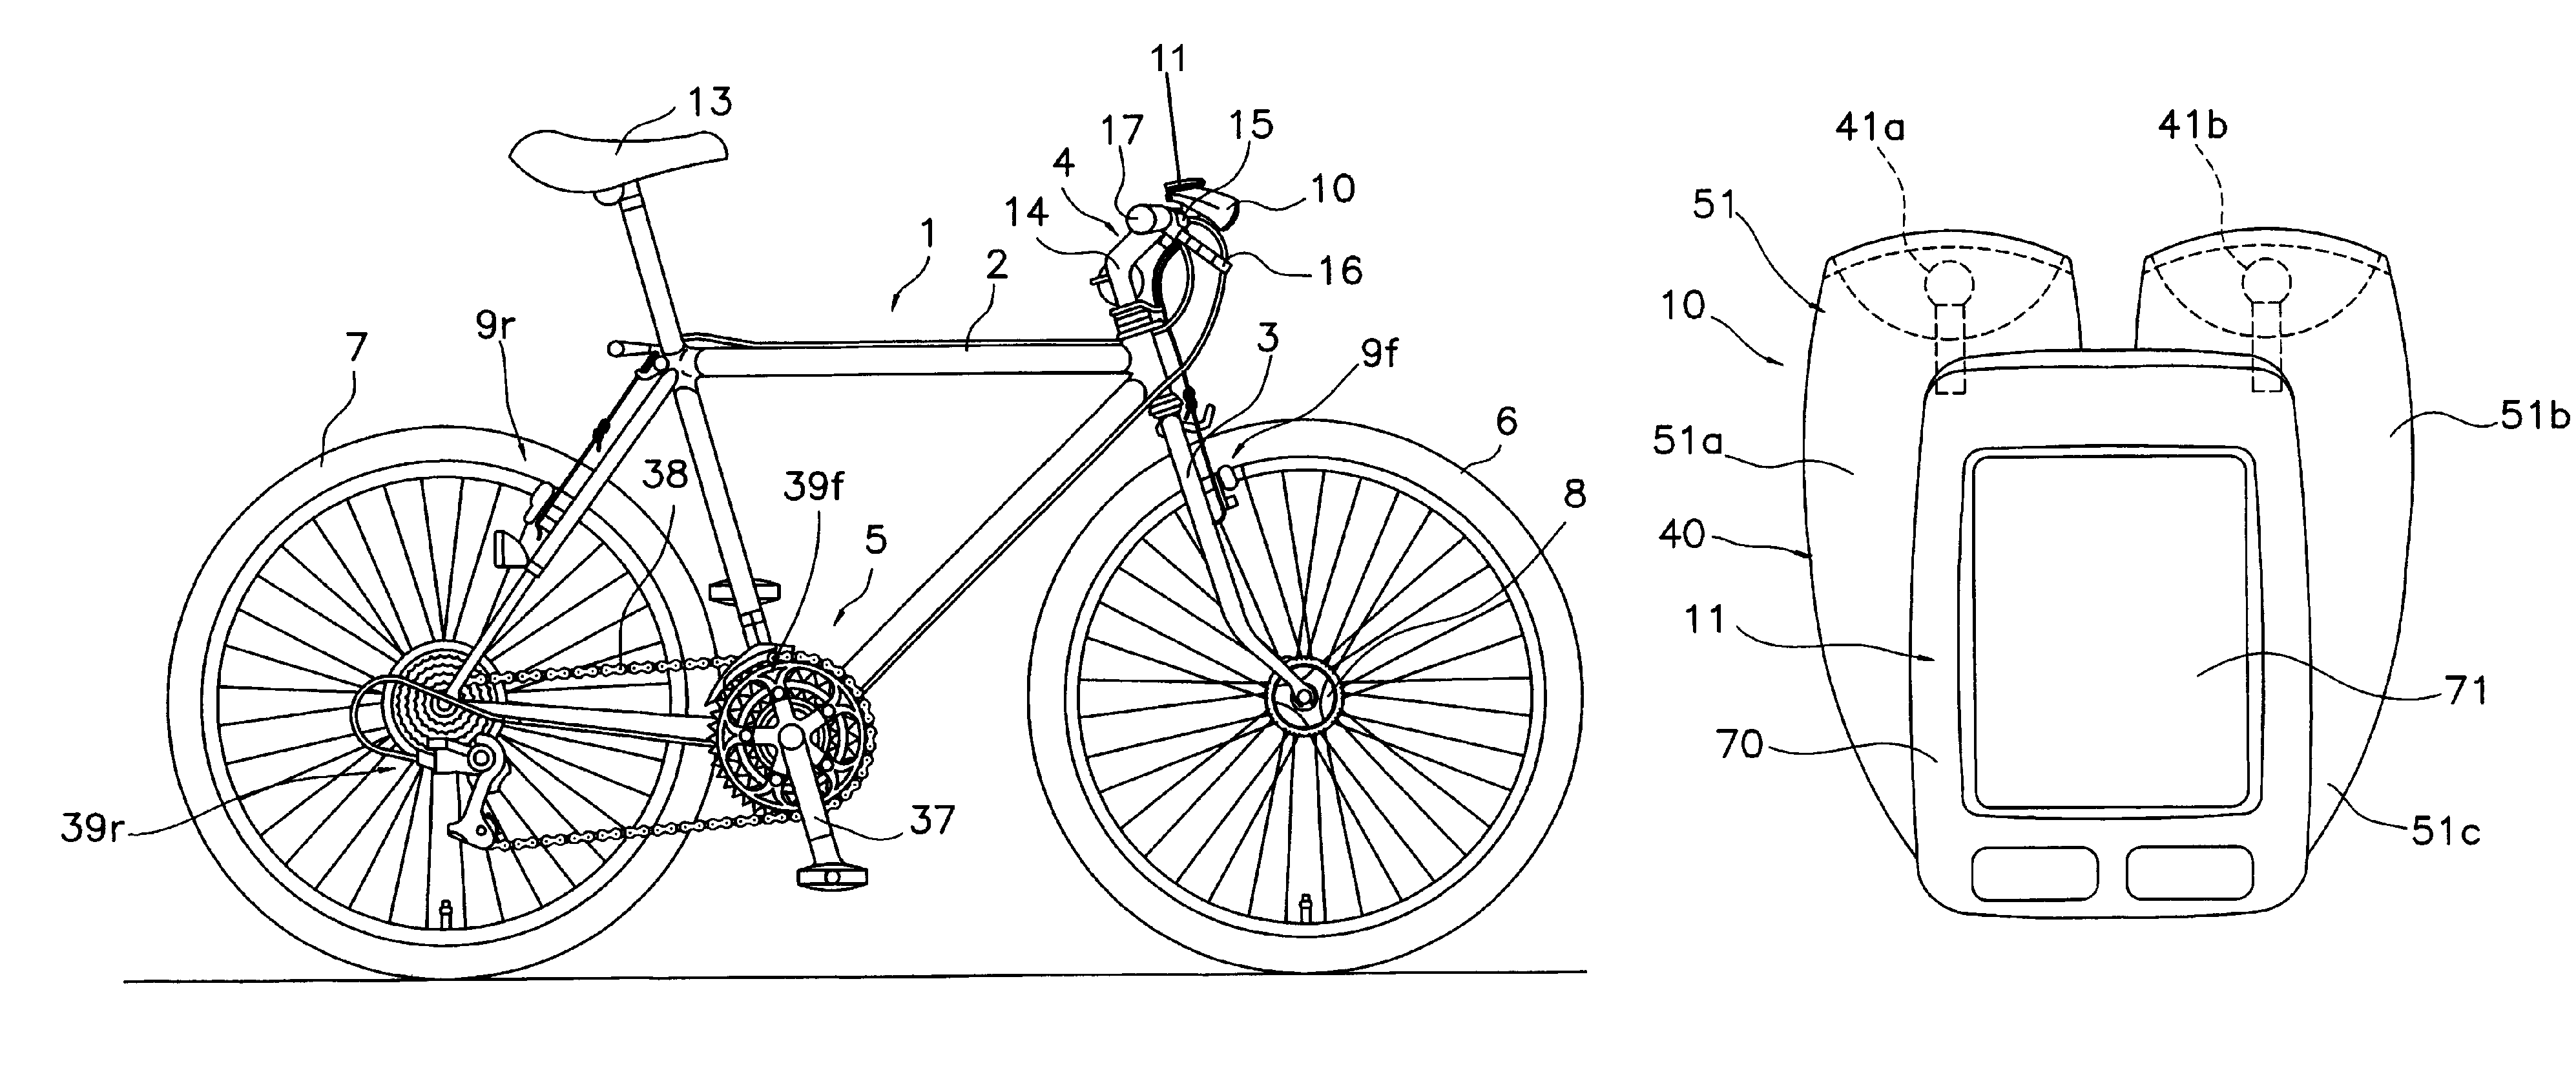 Bicycle lighting apparatus with mountable display